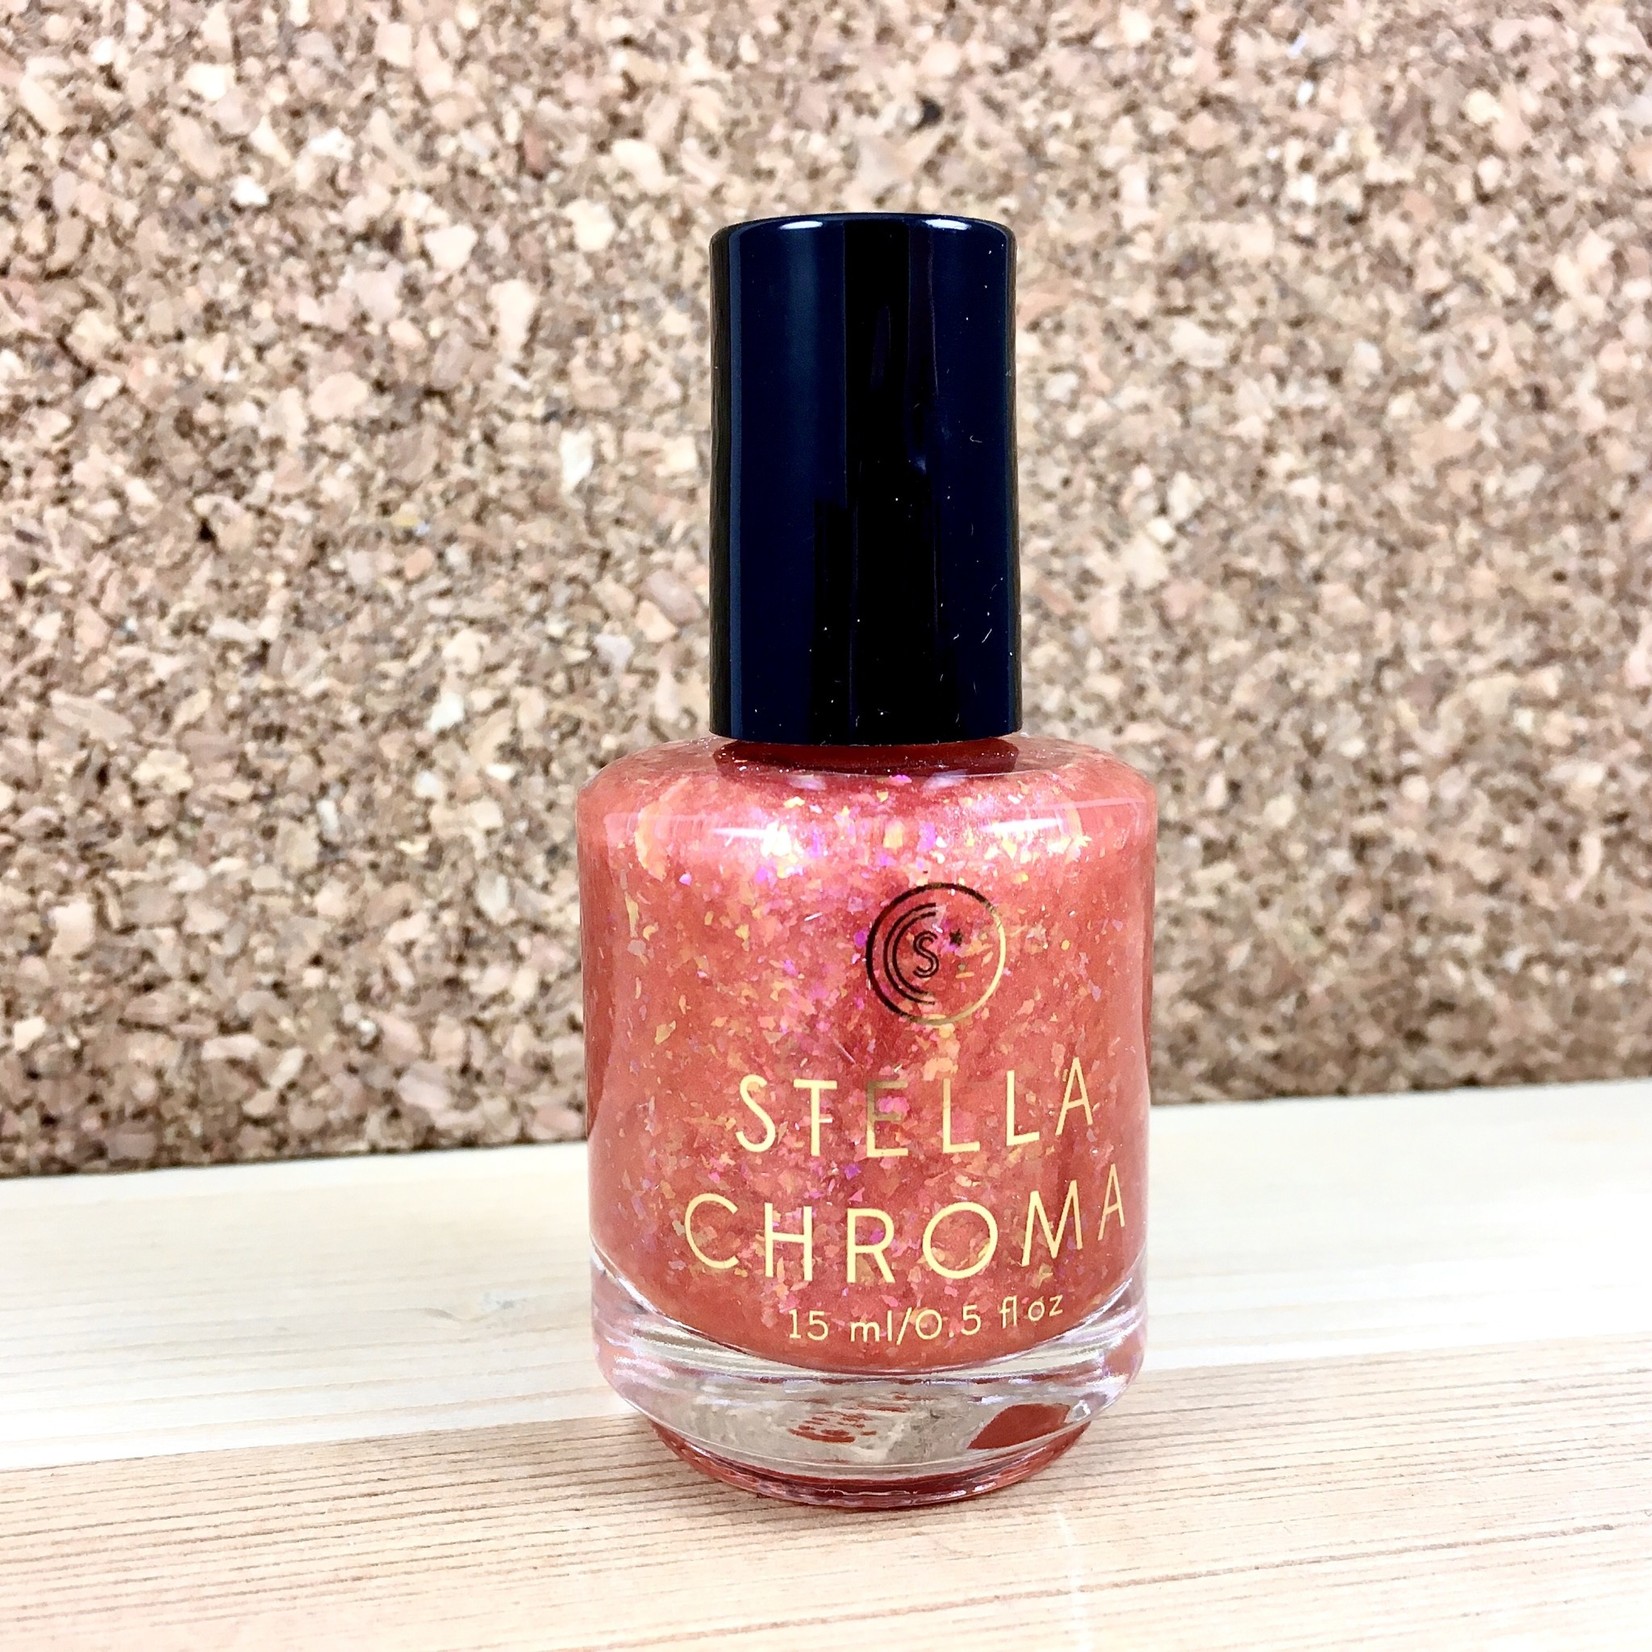 Stella Chroma / Paint Box Polish Color Collection Nail Polish